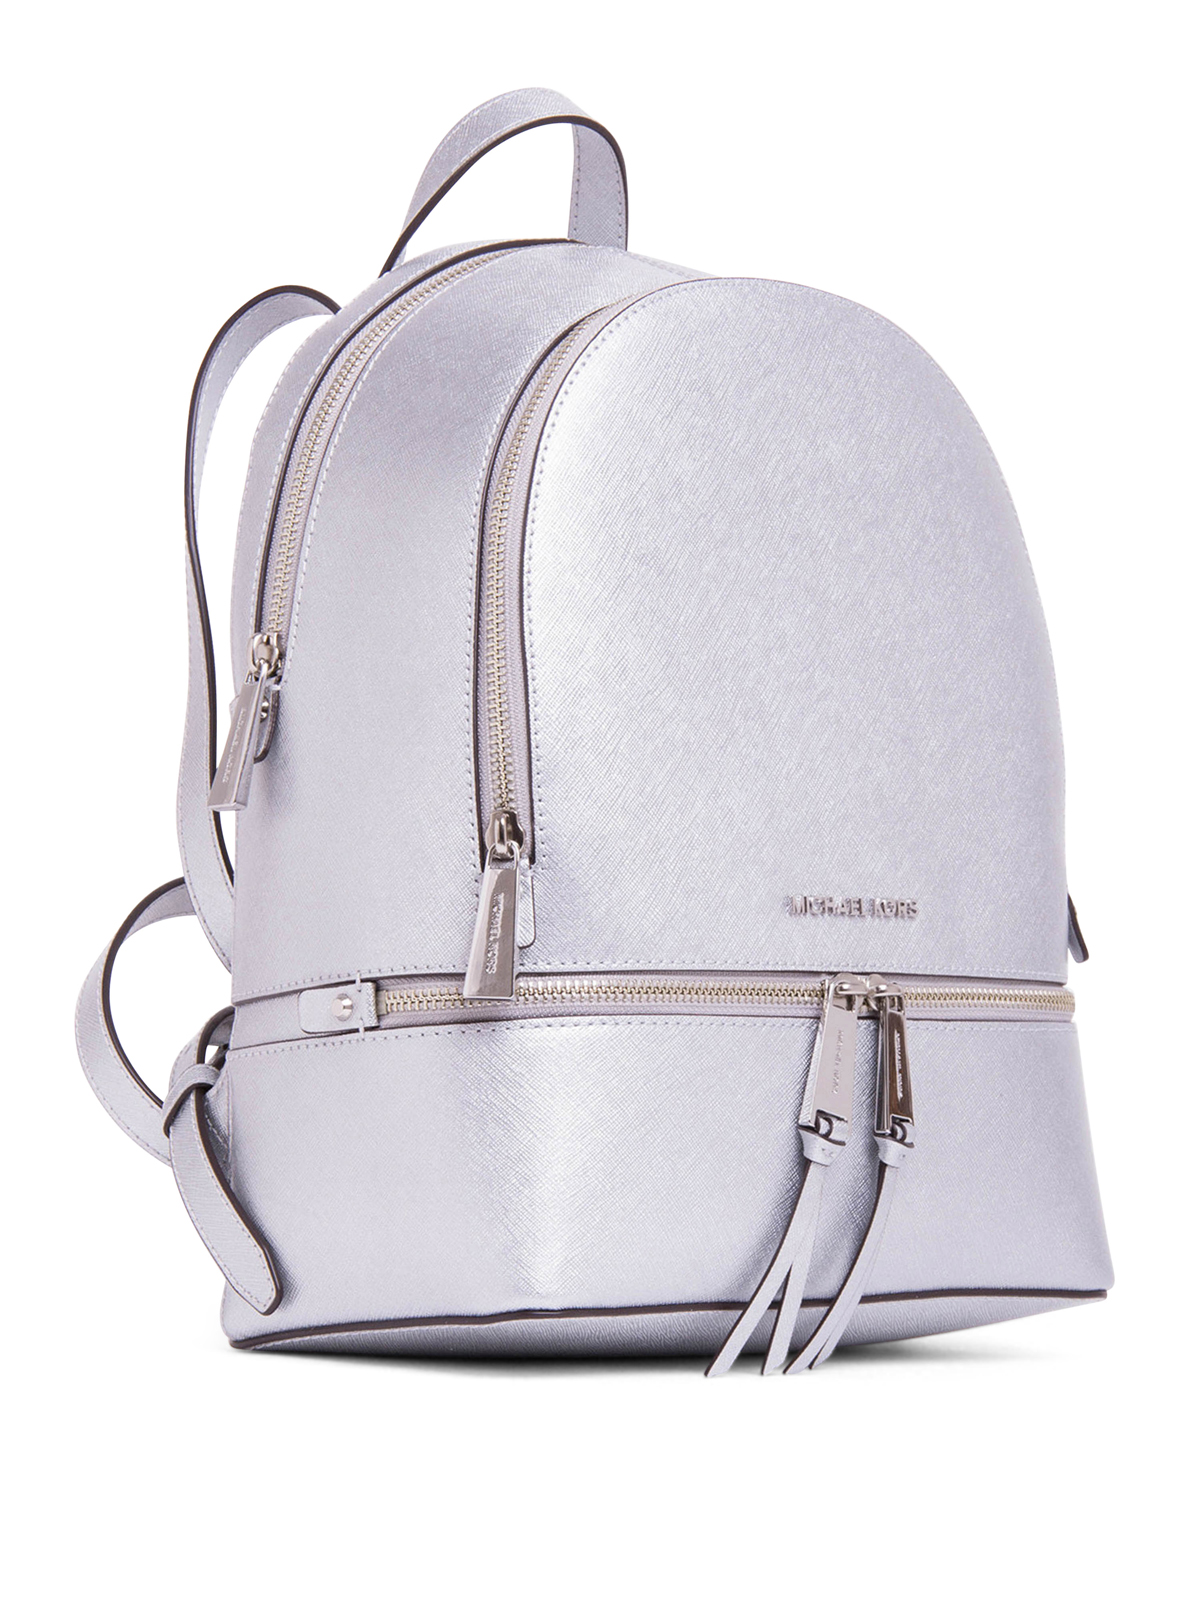 michael kors rhea metallic backpack